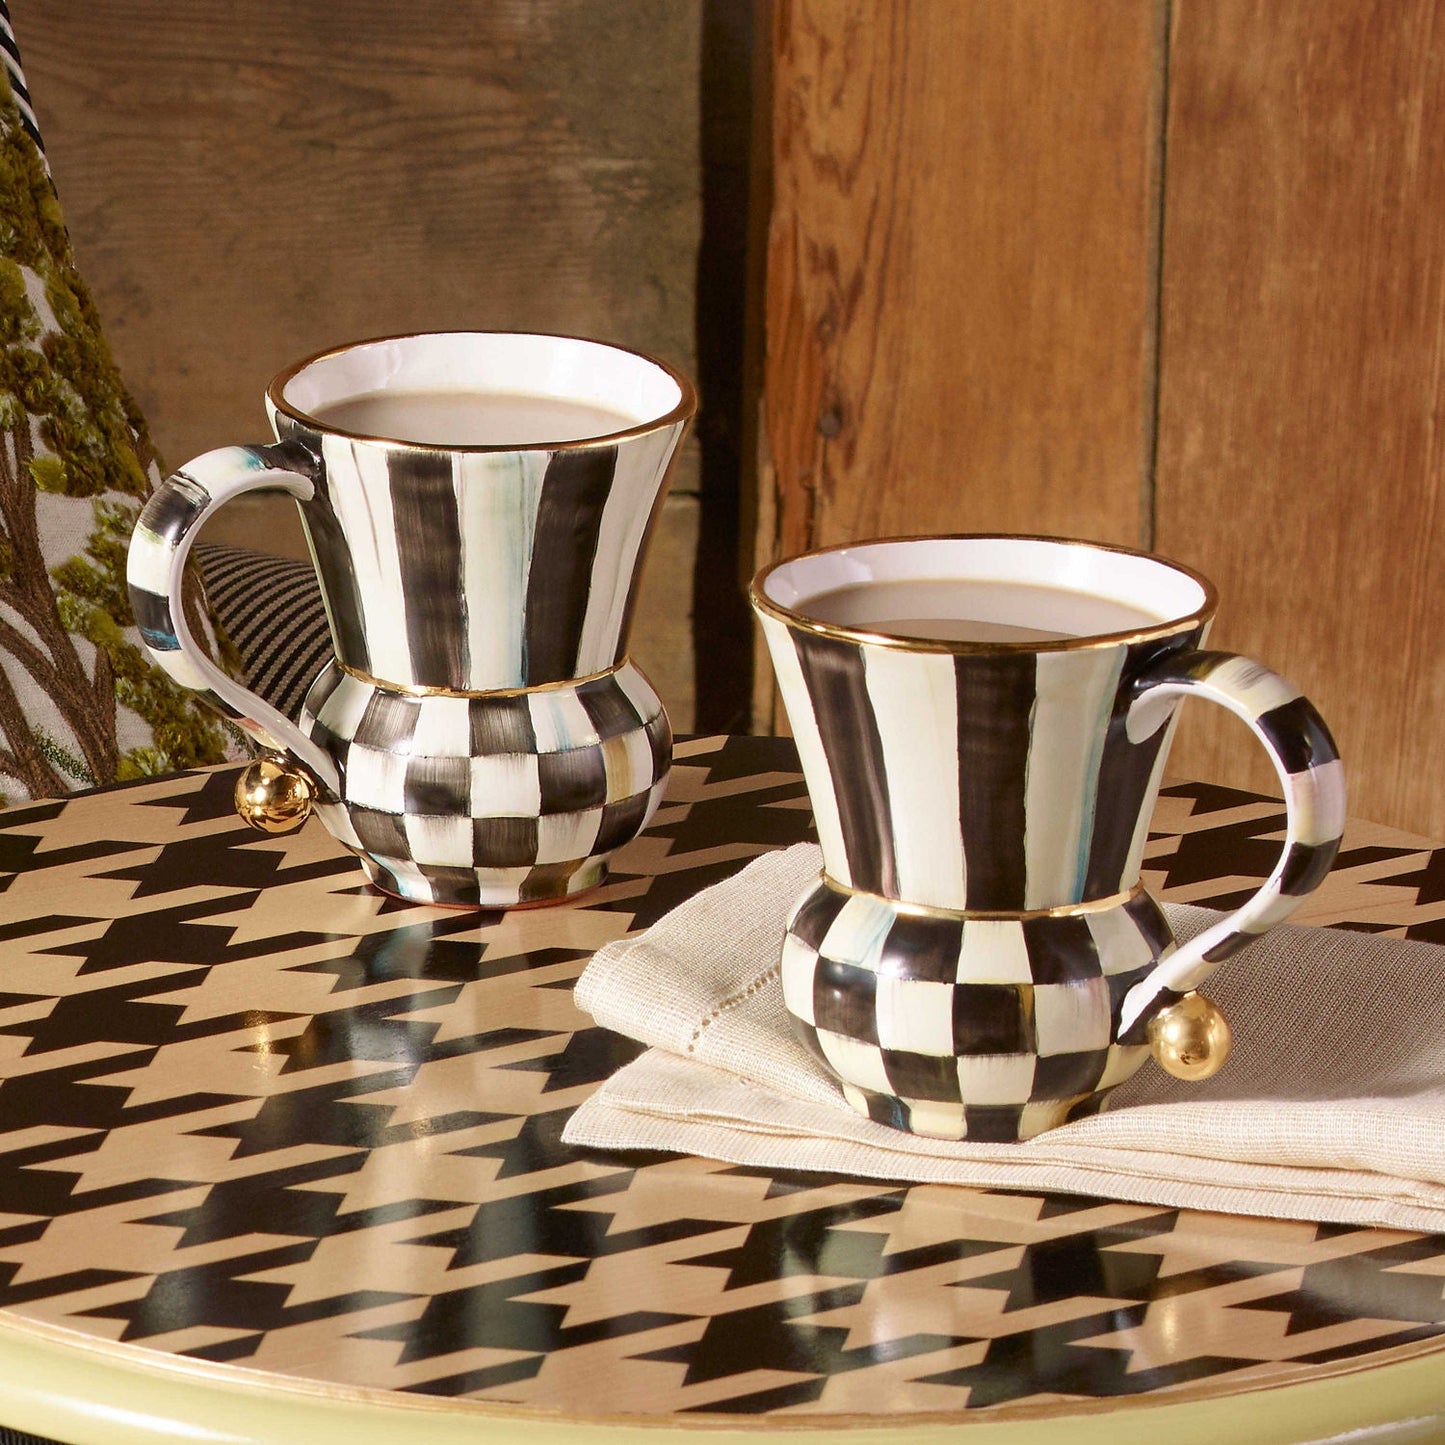 Courtly Check Ceramic Mug by Mackenzie-Childs - |VESIMI Design|